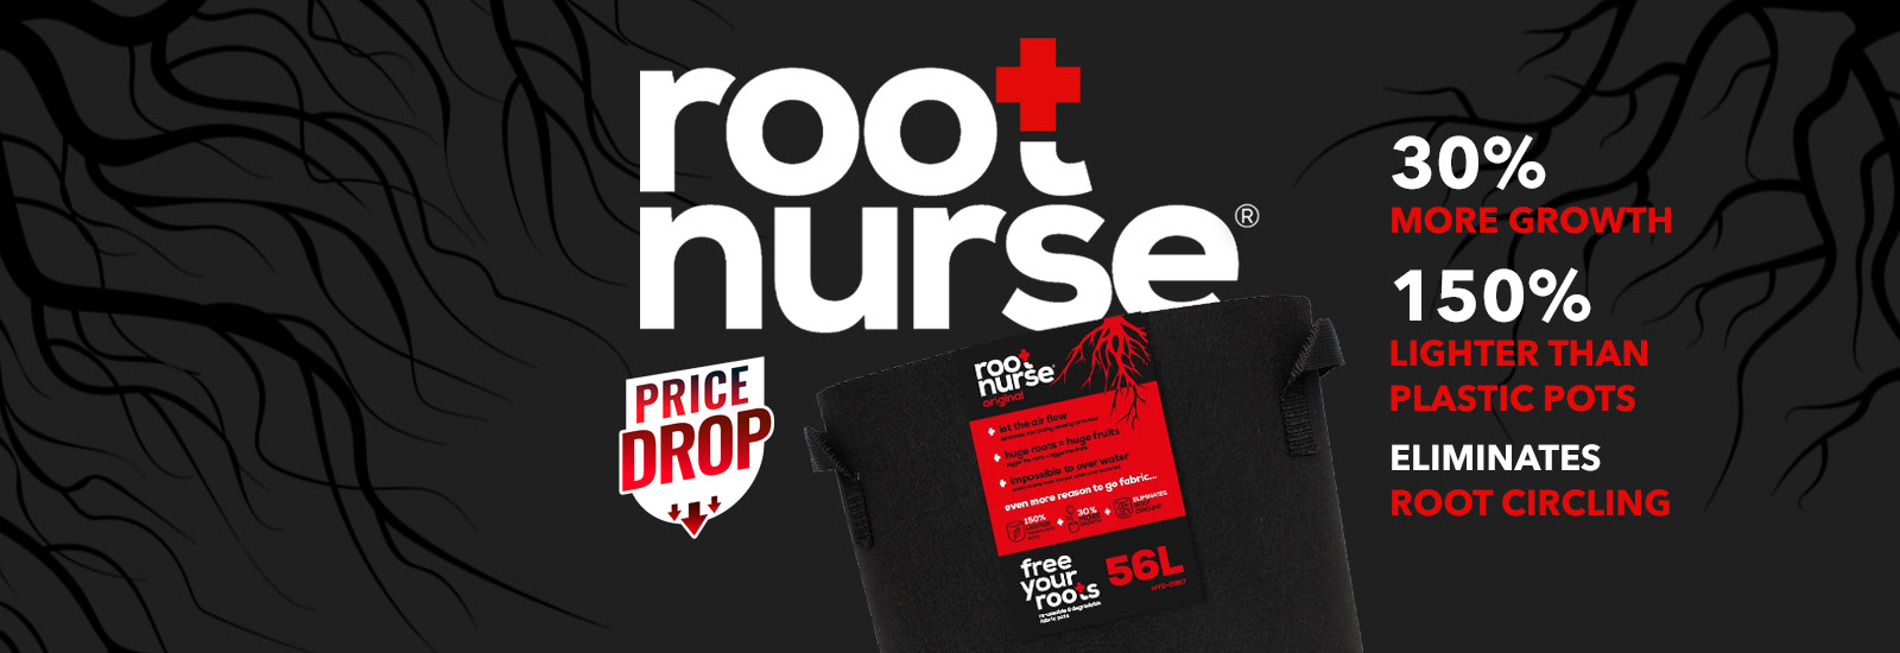 Root Nurse